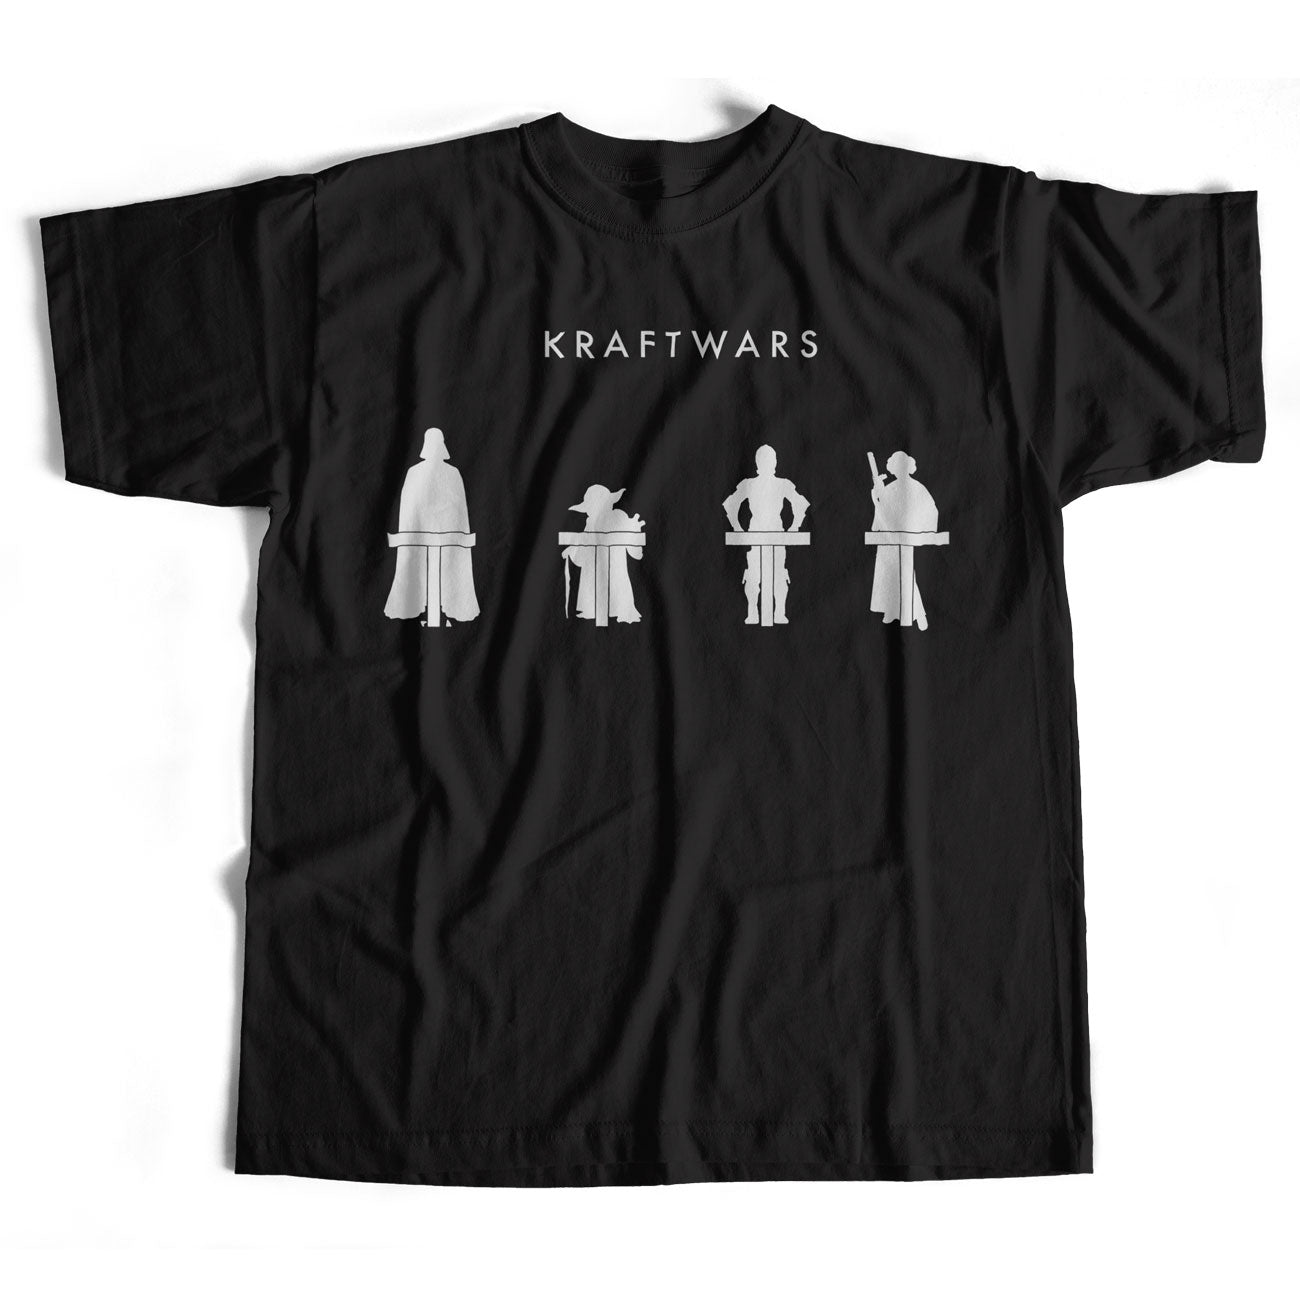 Kraftwars T Shirt - An Old Skool Hooligans Sci-Fi Krautrock Synth Mashup